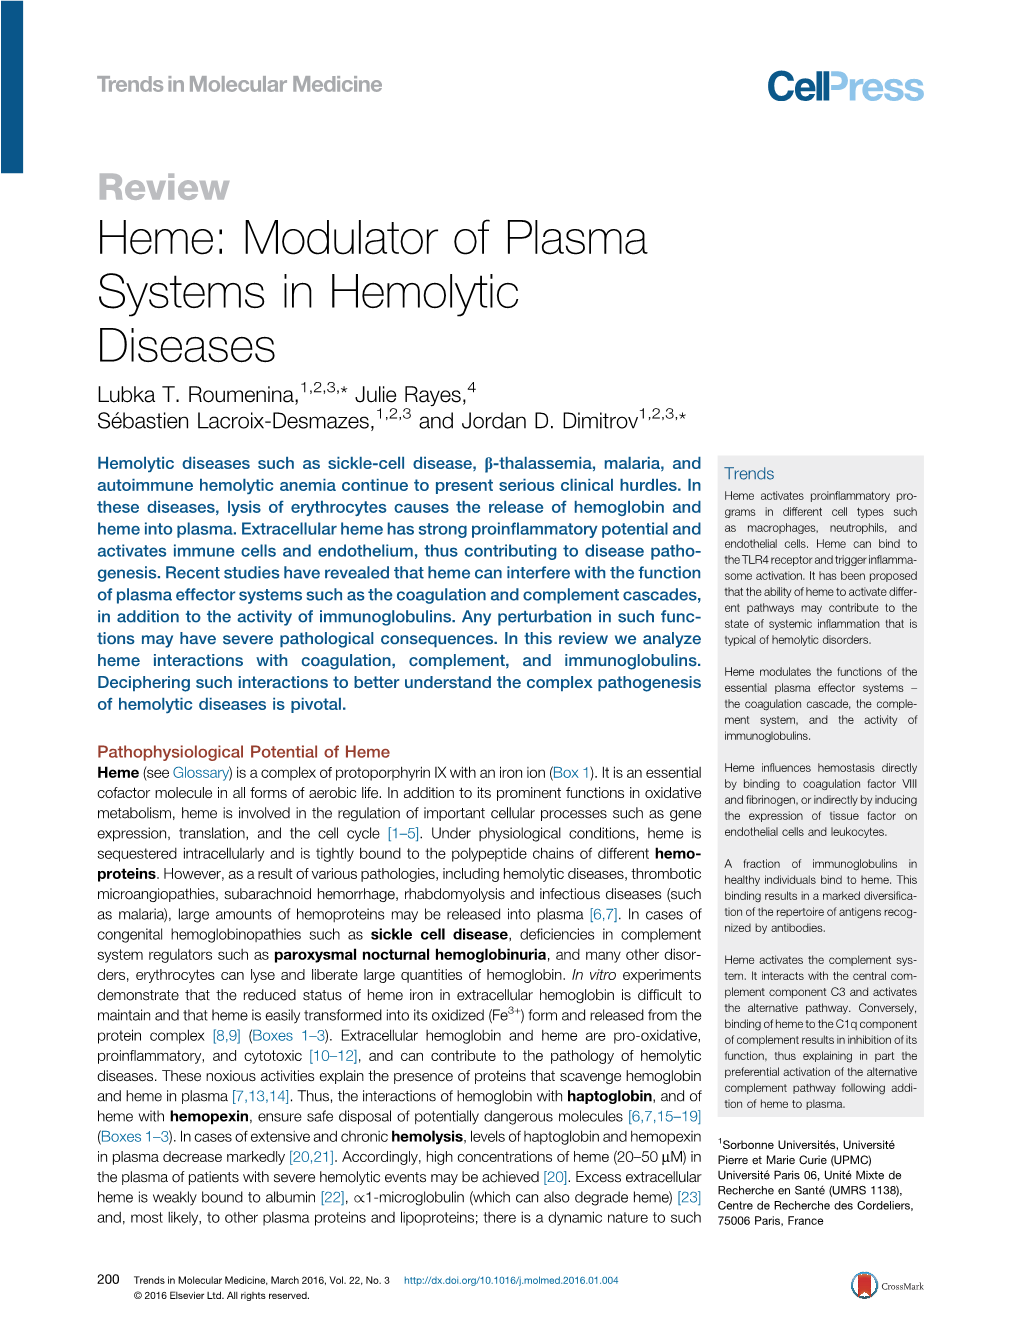 Heme: Modulator of Plasma Systems in Hemolytic Diseases